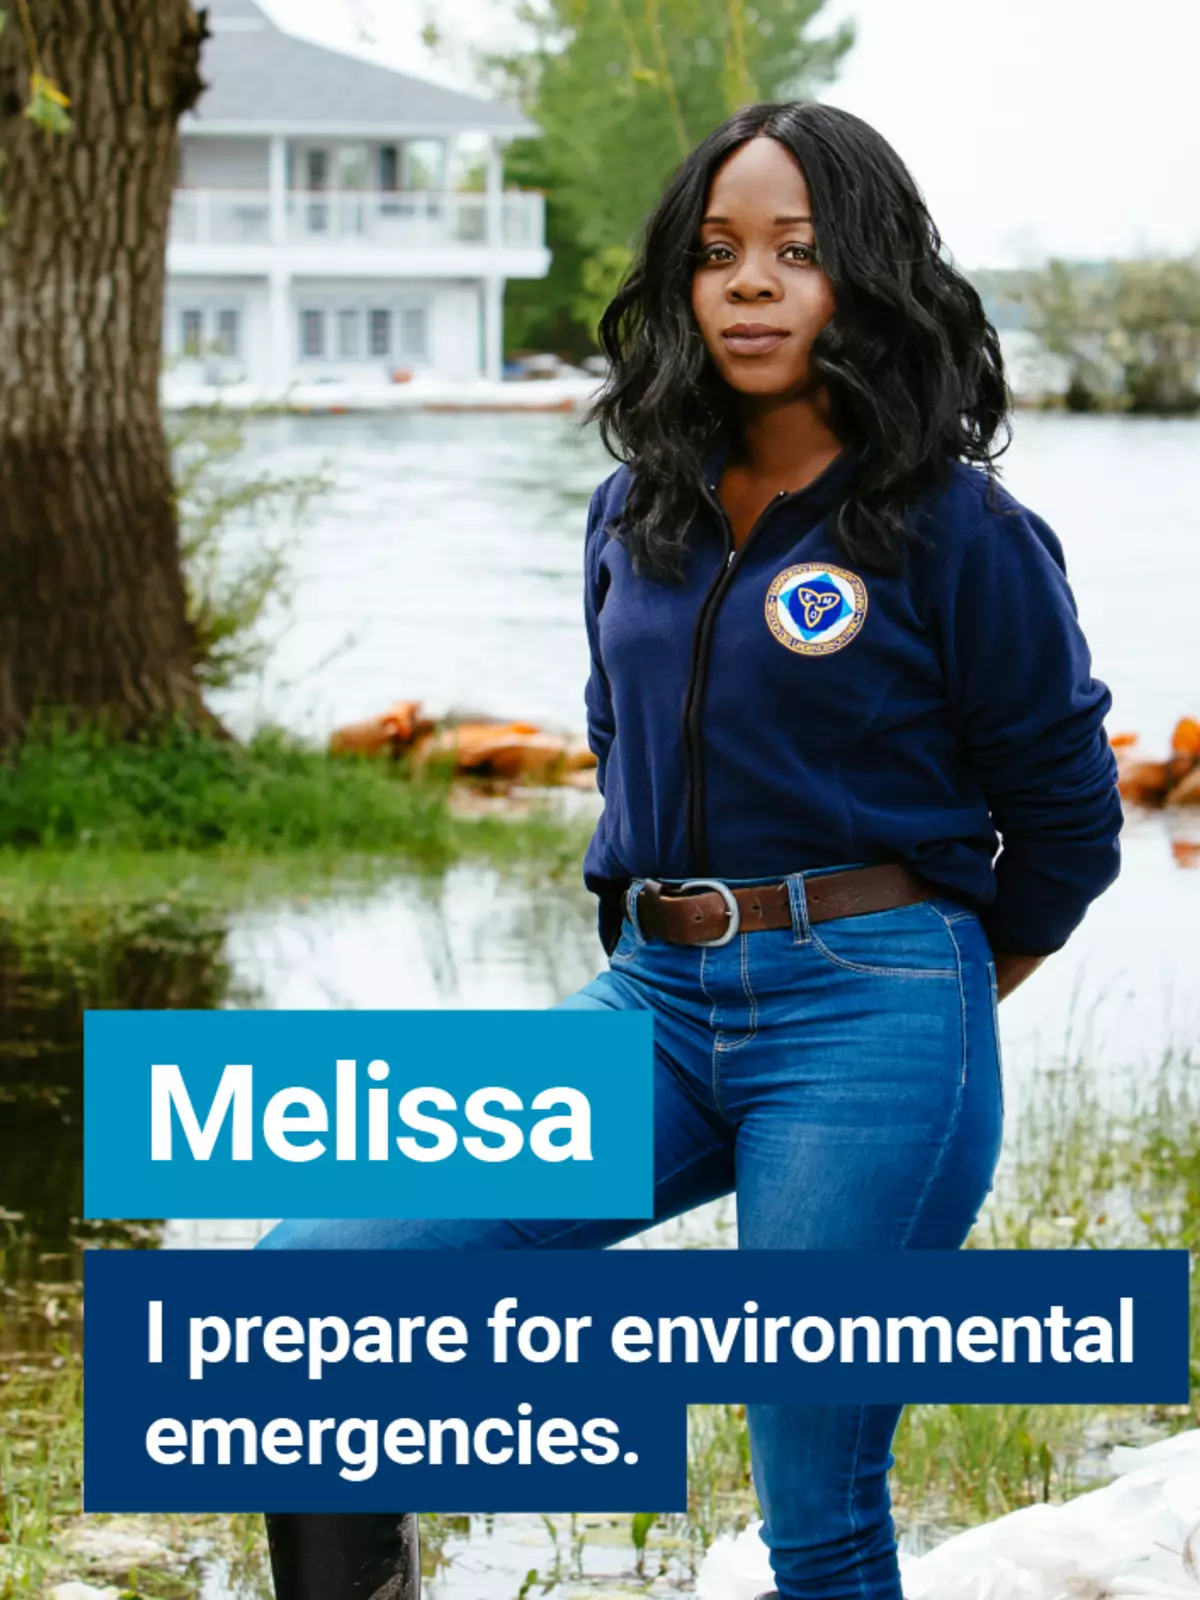 "Melissa - I prepare for environmental emergencies" AMAPCEO member Melissa, a program assistant at emergency management